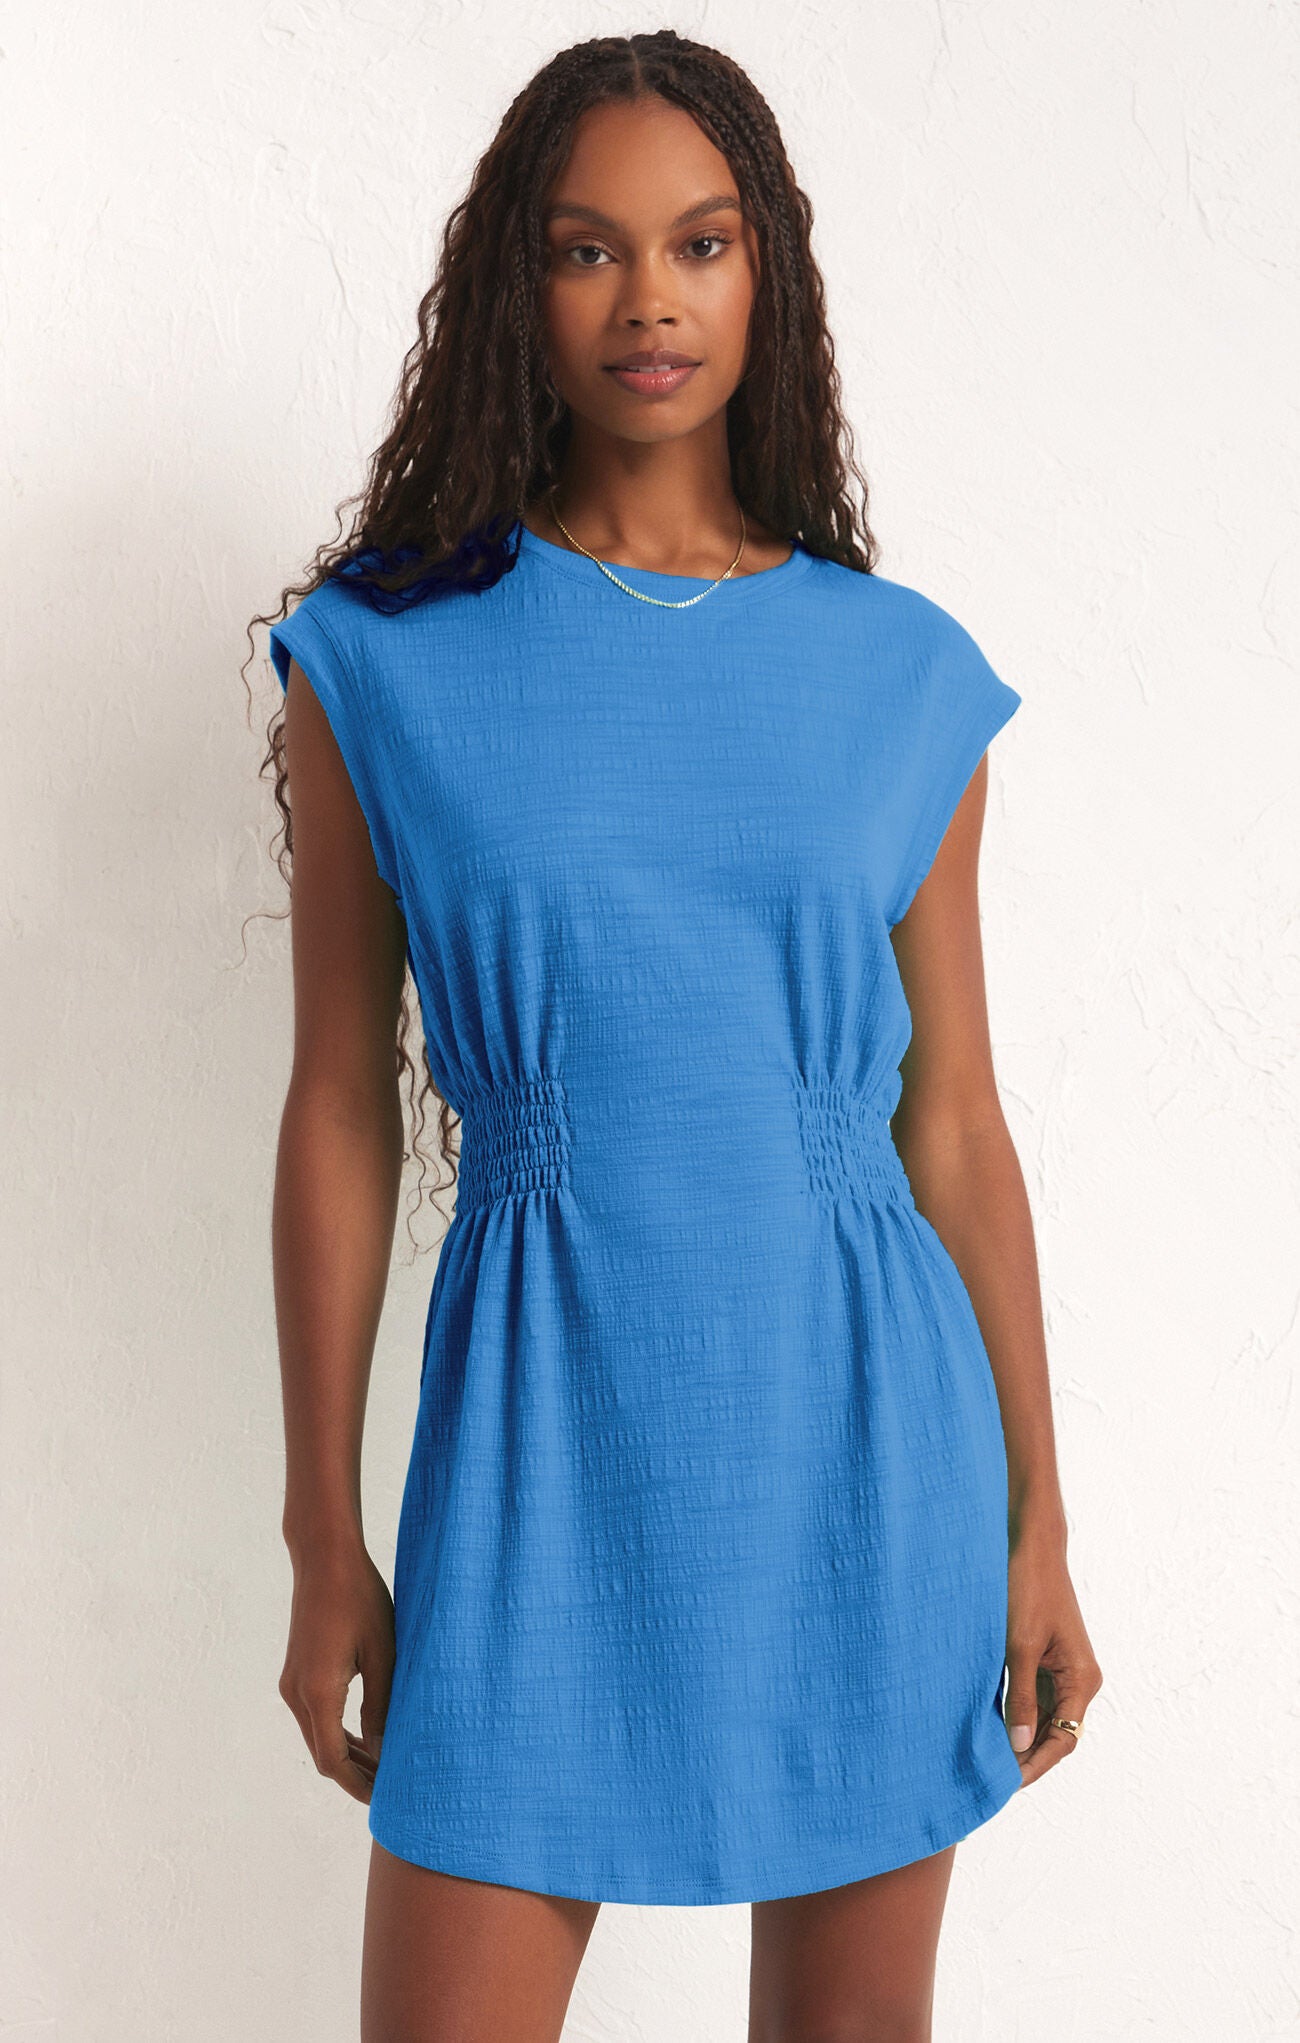 Rowan Textured Knit Dress in Blue Wave